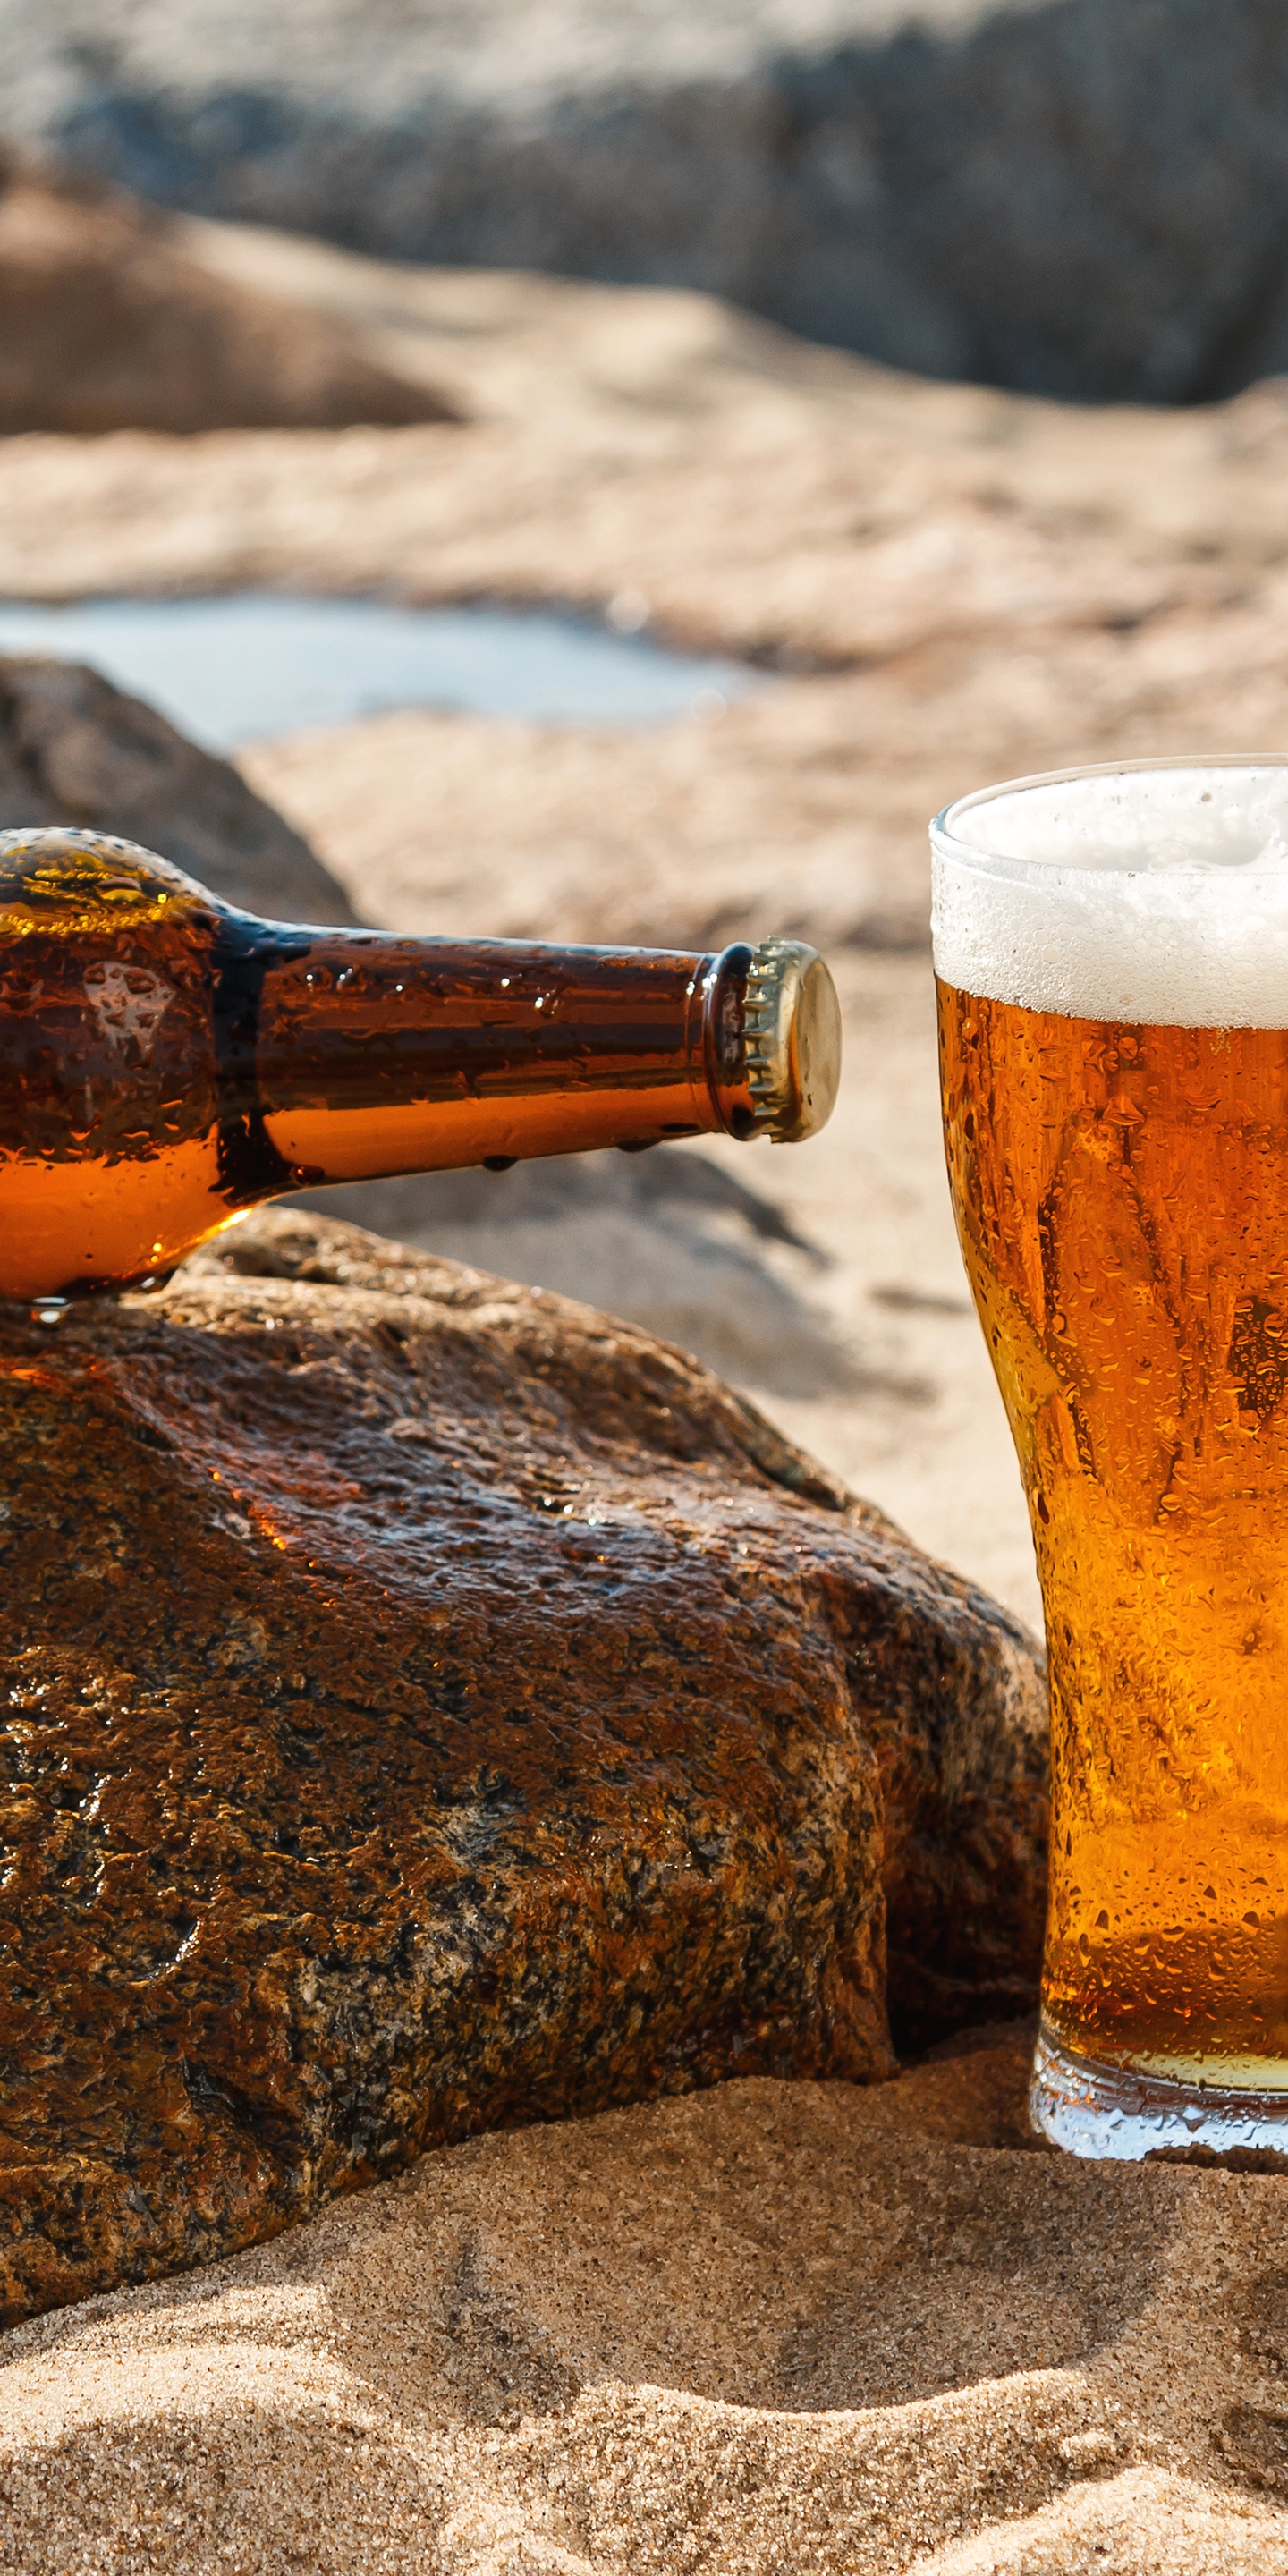 Image: Sand, stones, glass, bottles, beer